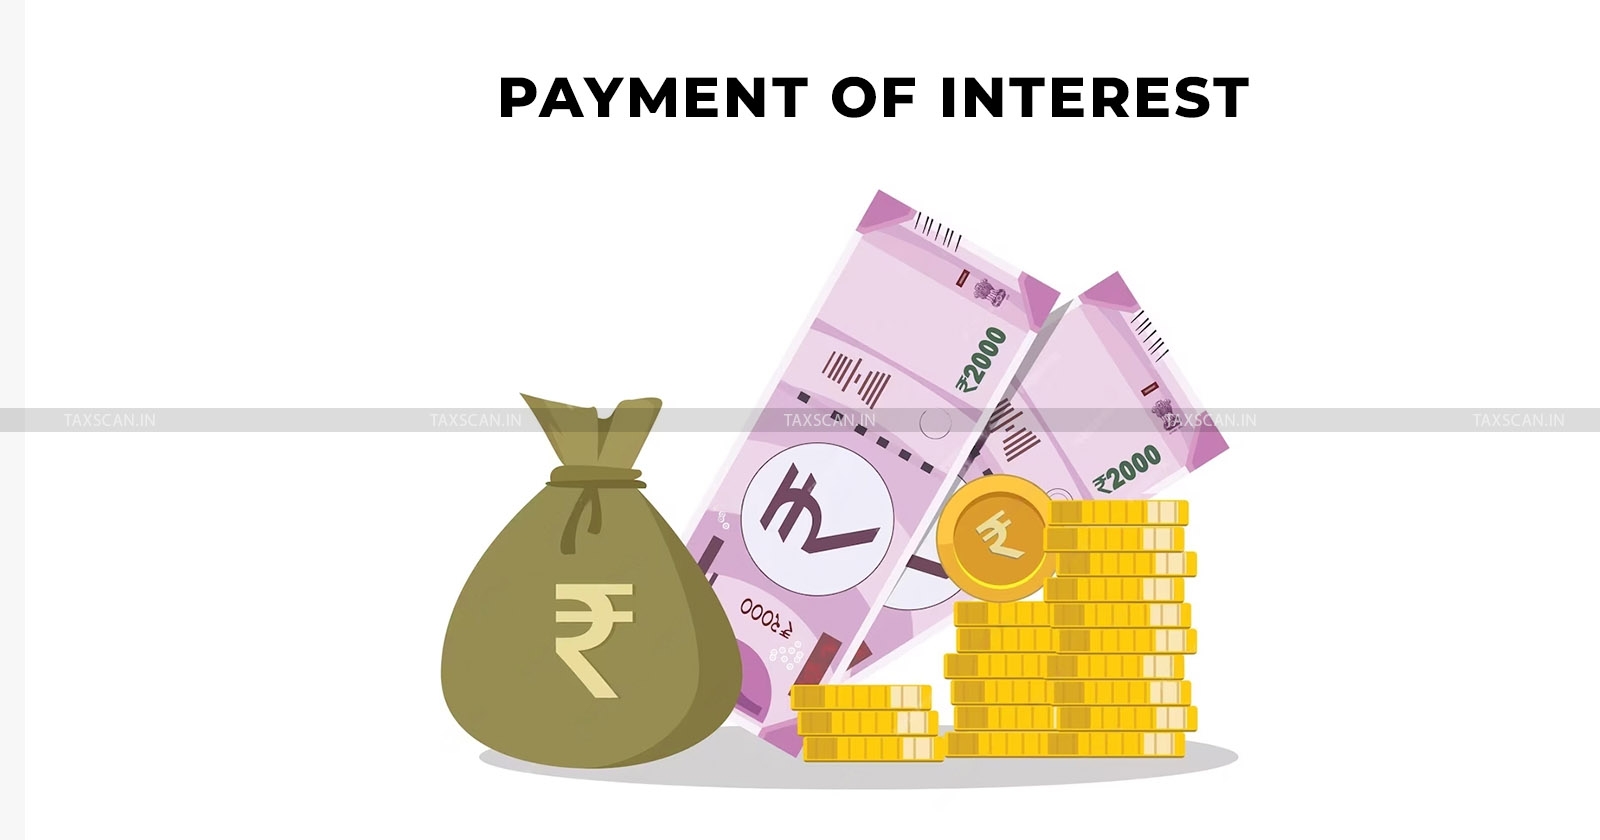 Payment of Interest - Interest - JVAT Act - Pay Interest - Refund Amount - sc - supreme court - TAXSCAN